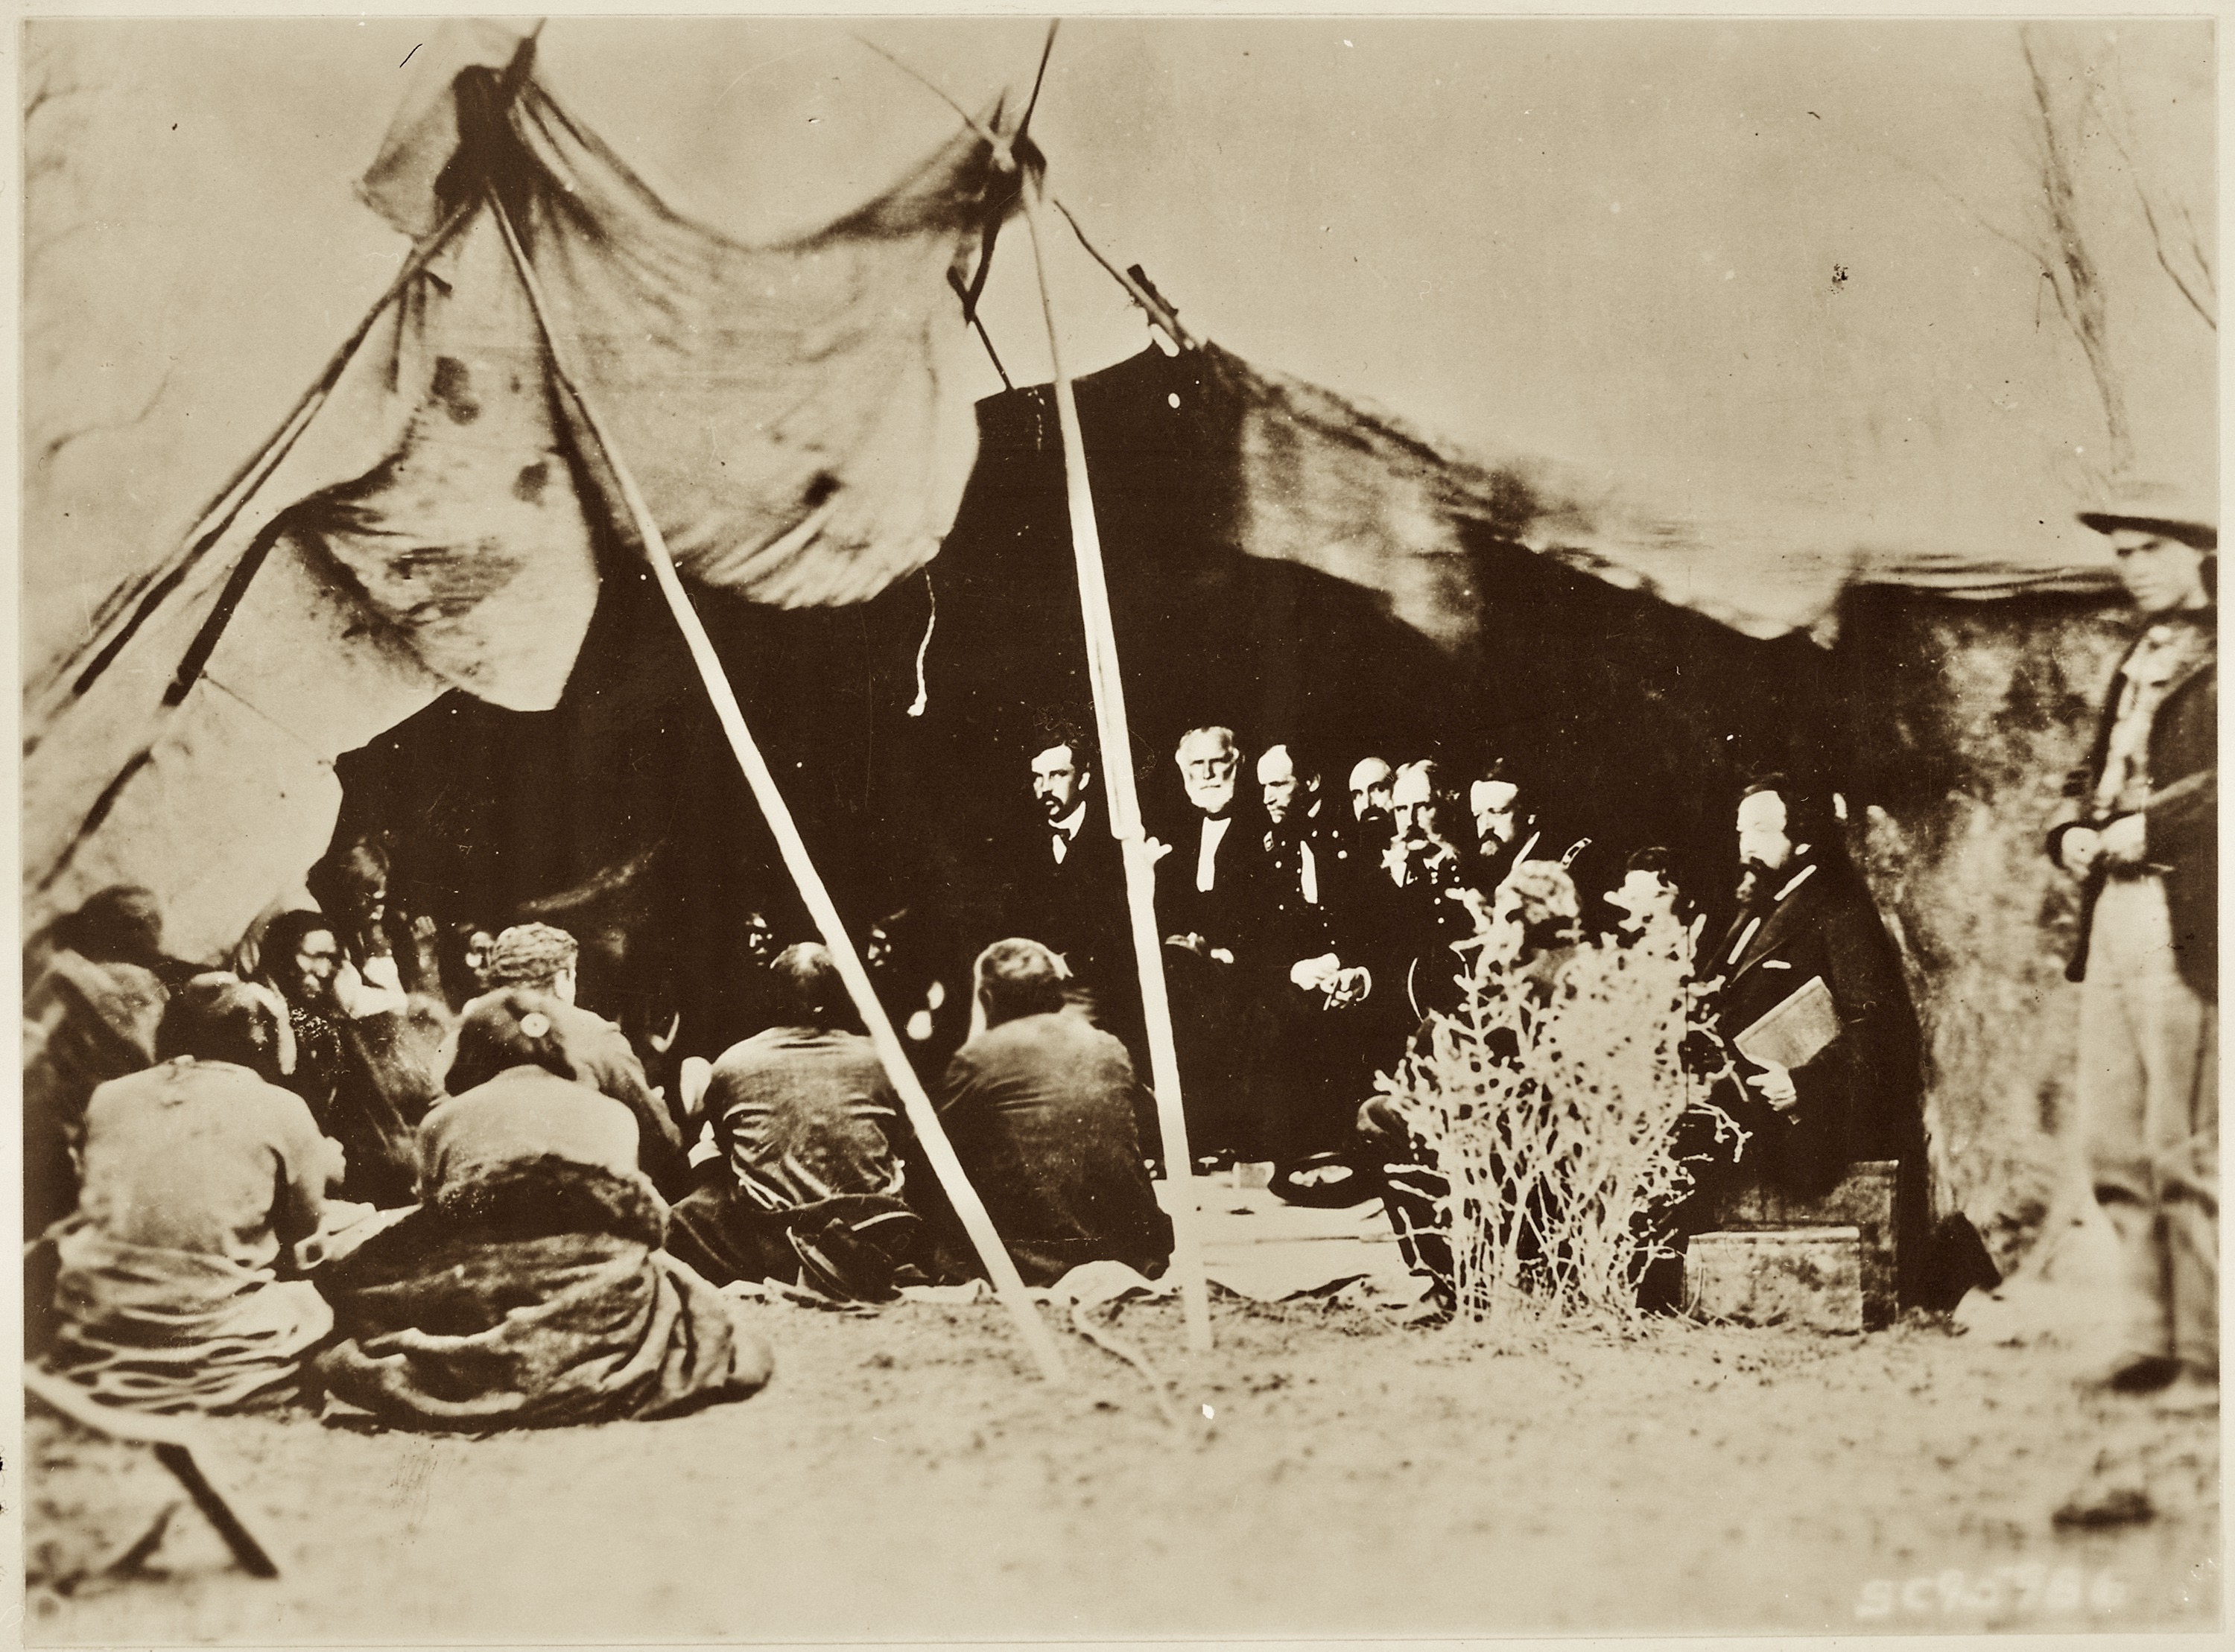 Tim Giago: Anniversary of 1868 Treaty of Fort Laramie approaches